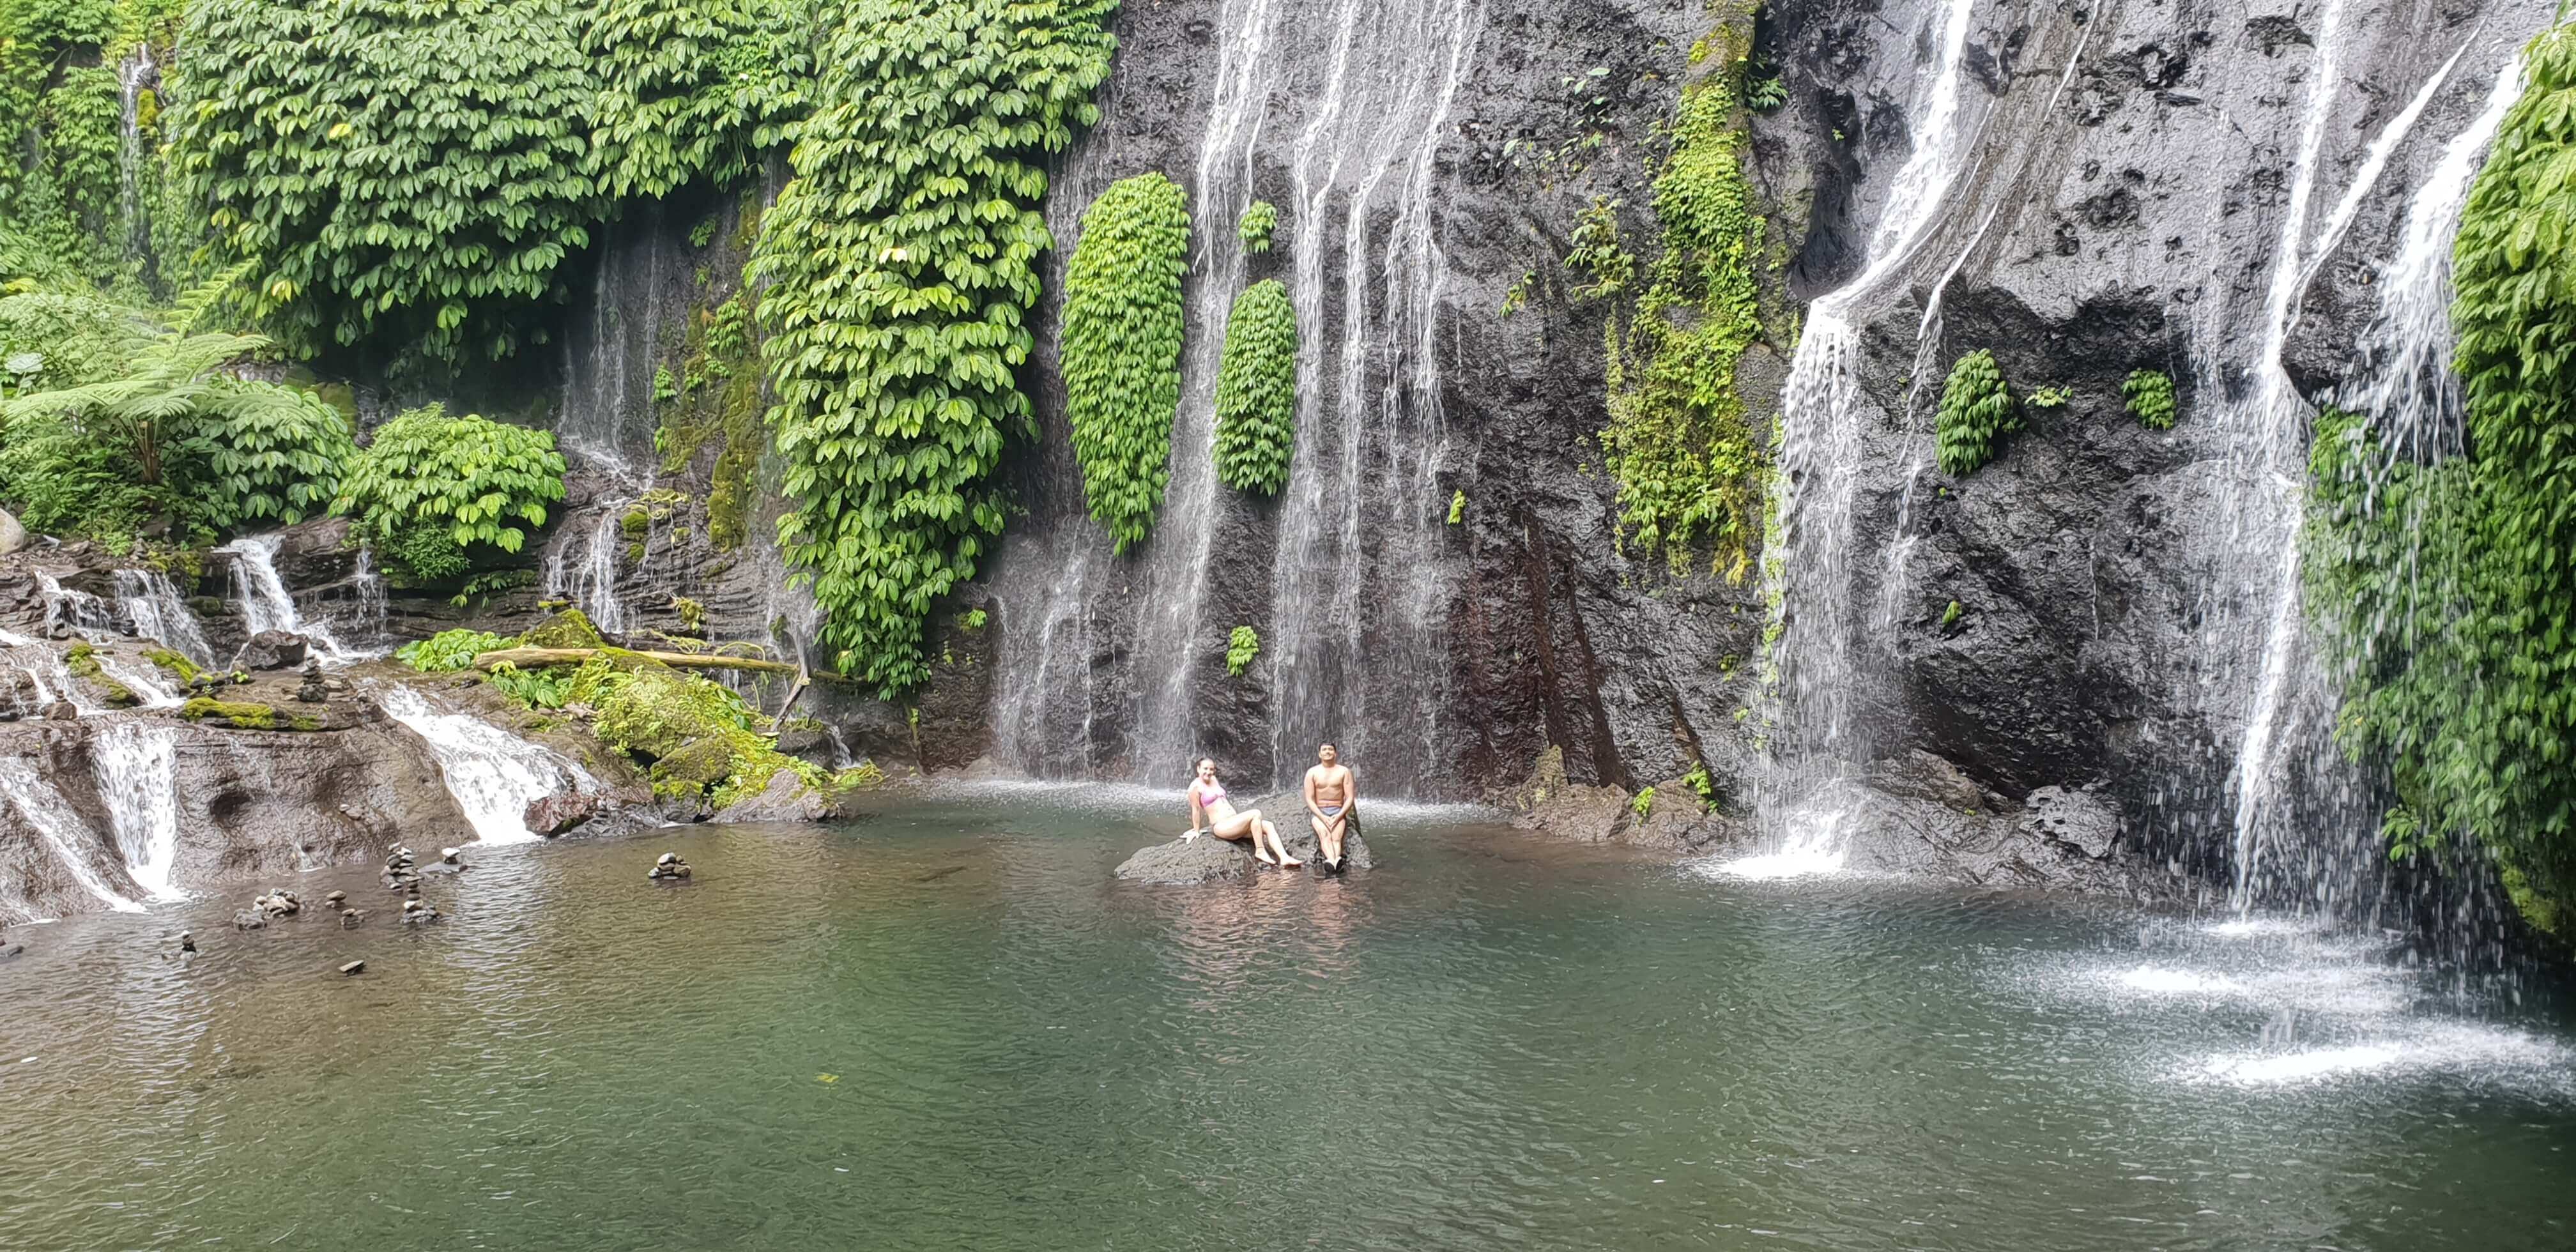 Banyumala Twin Waterfall is hands down the best waterfall in Bali